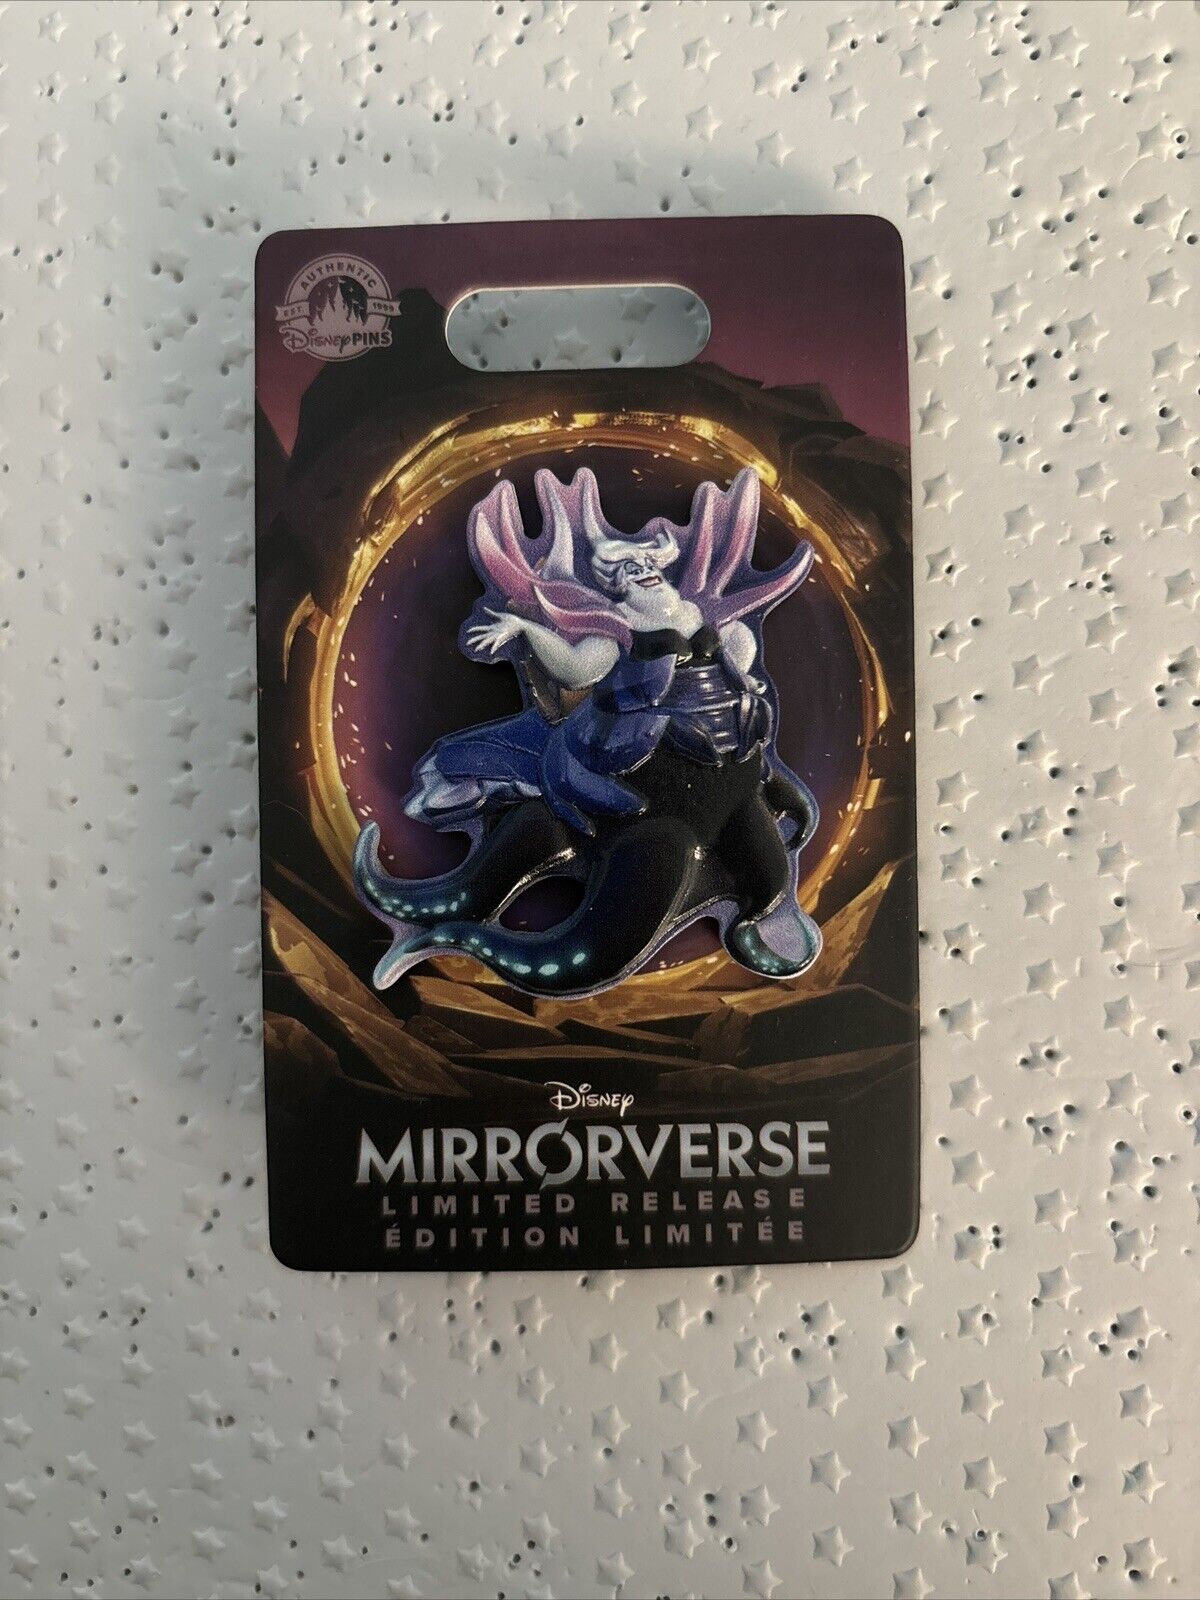 Ursula Mirrorverse Disney Villains Limited Release Pin